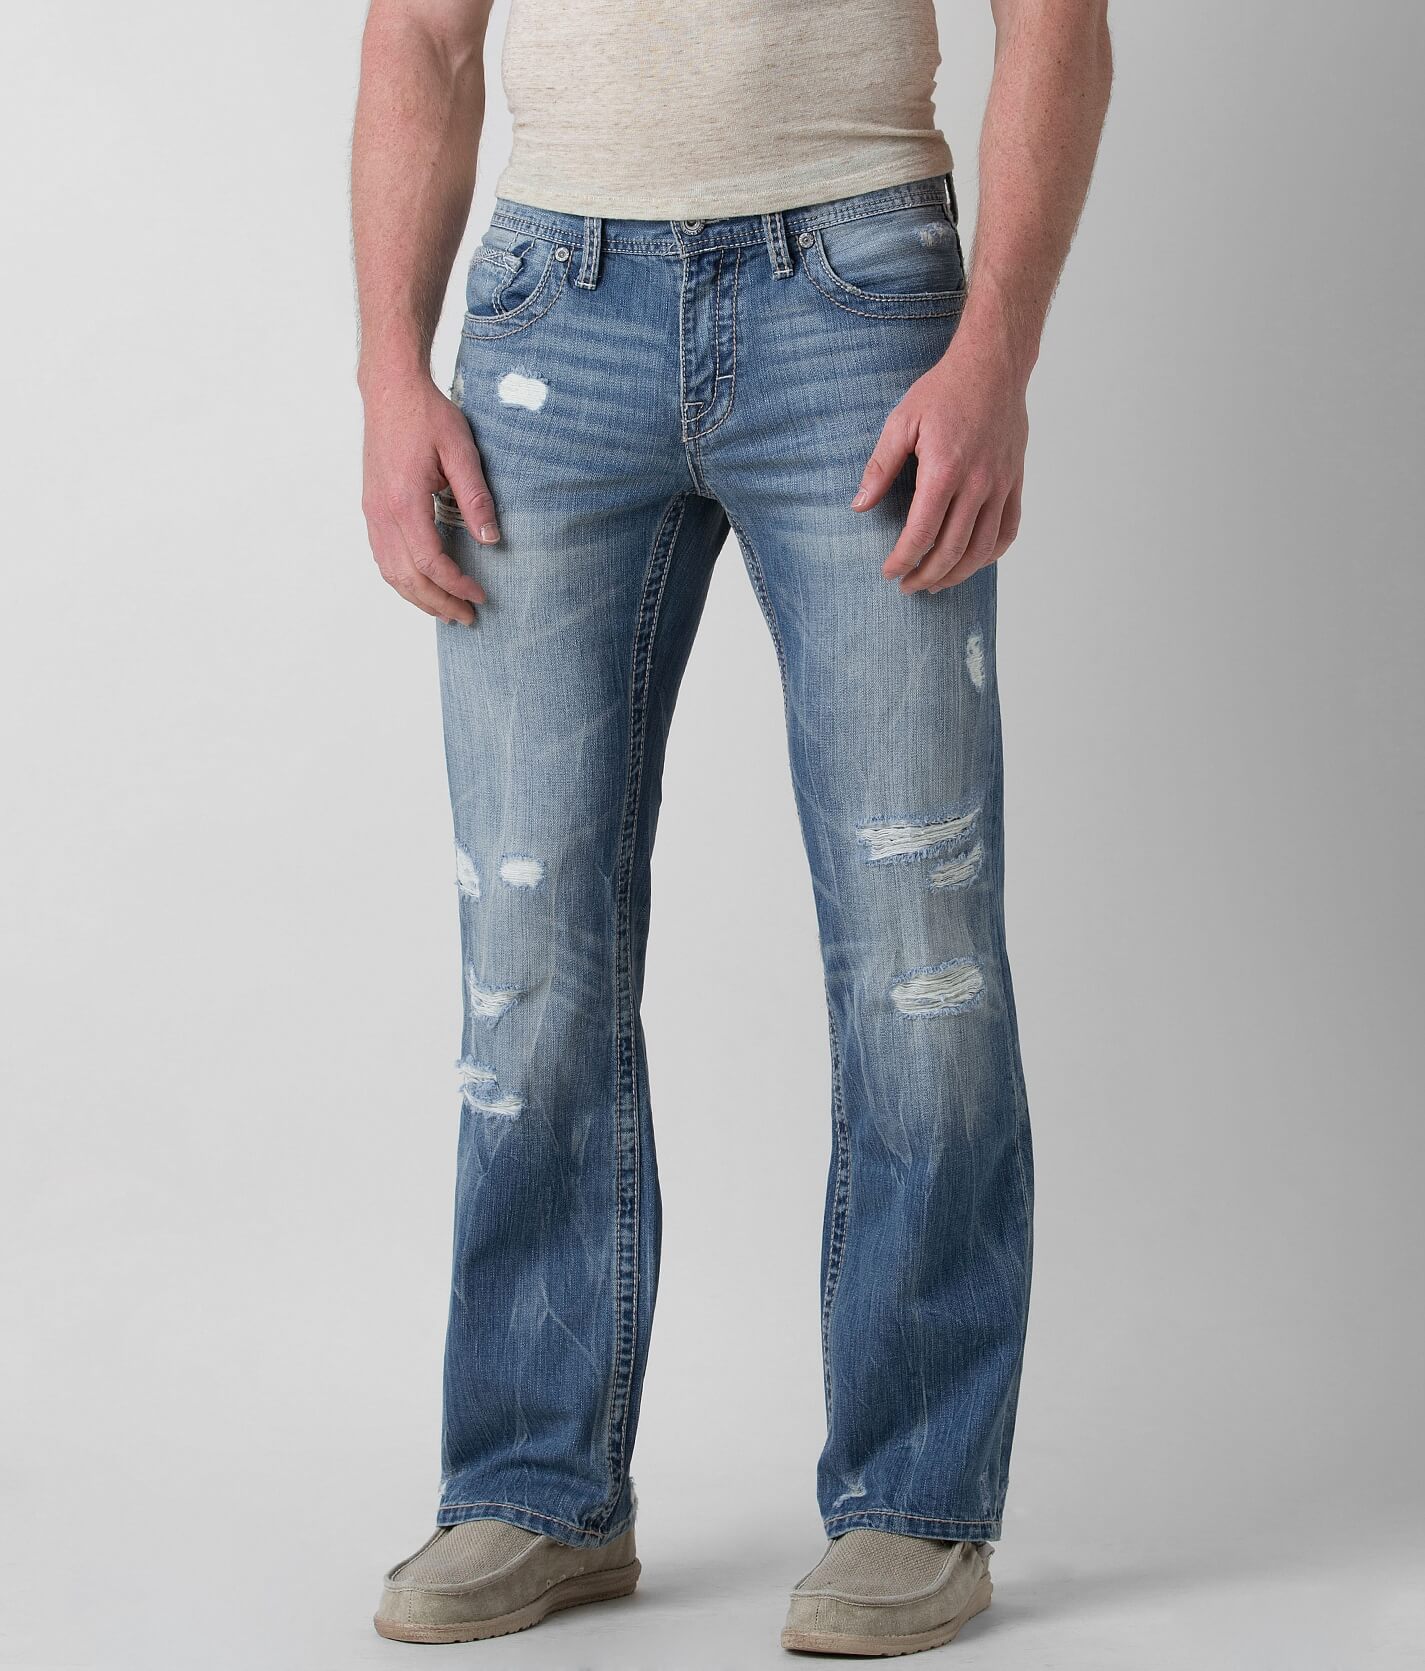 buckle carter jeans